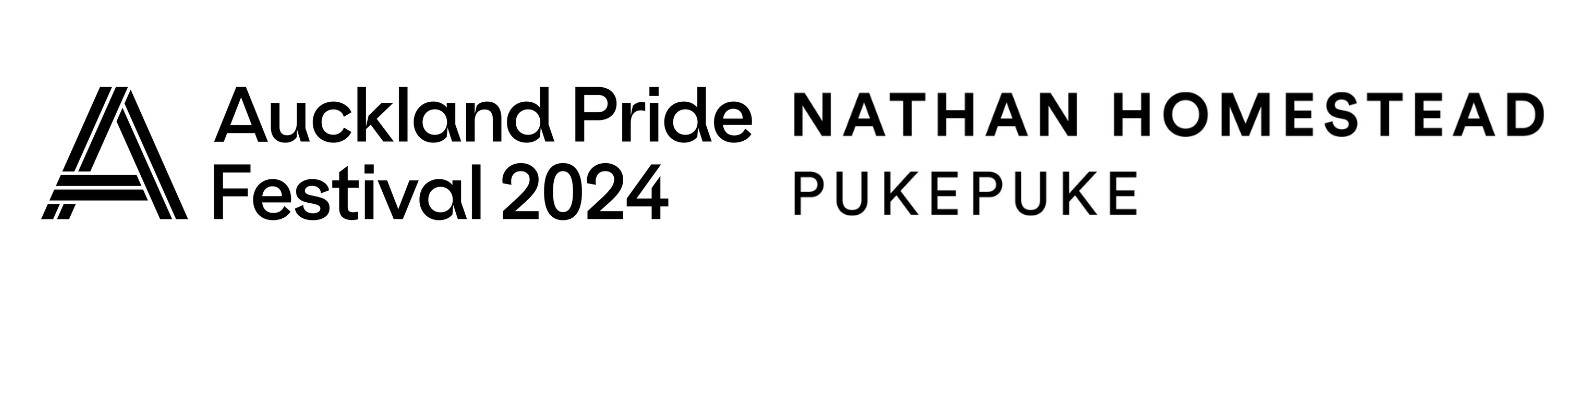 A black and white logo for Auckland Pride Festival 2024, and Nathan Homestead Pukepuke